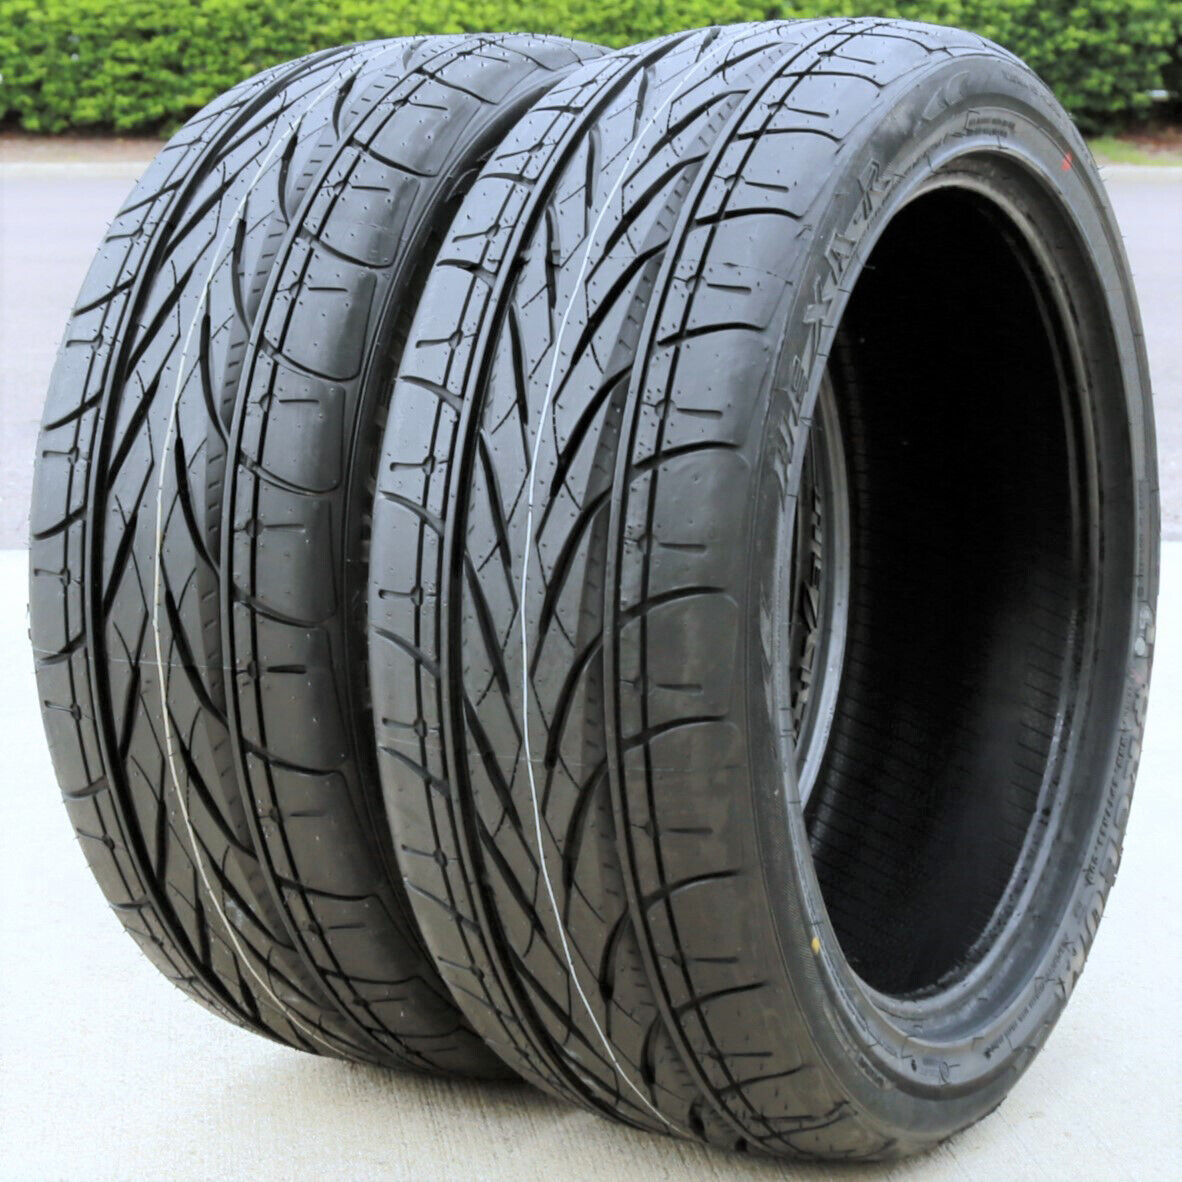 2 Forceum Hexa-R 205/45R18 90Y XL ZR A/S High Performance All Season Tire